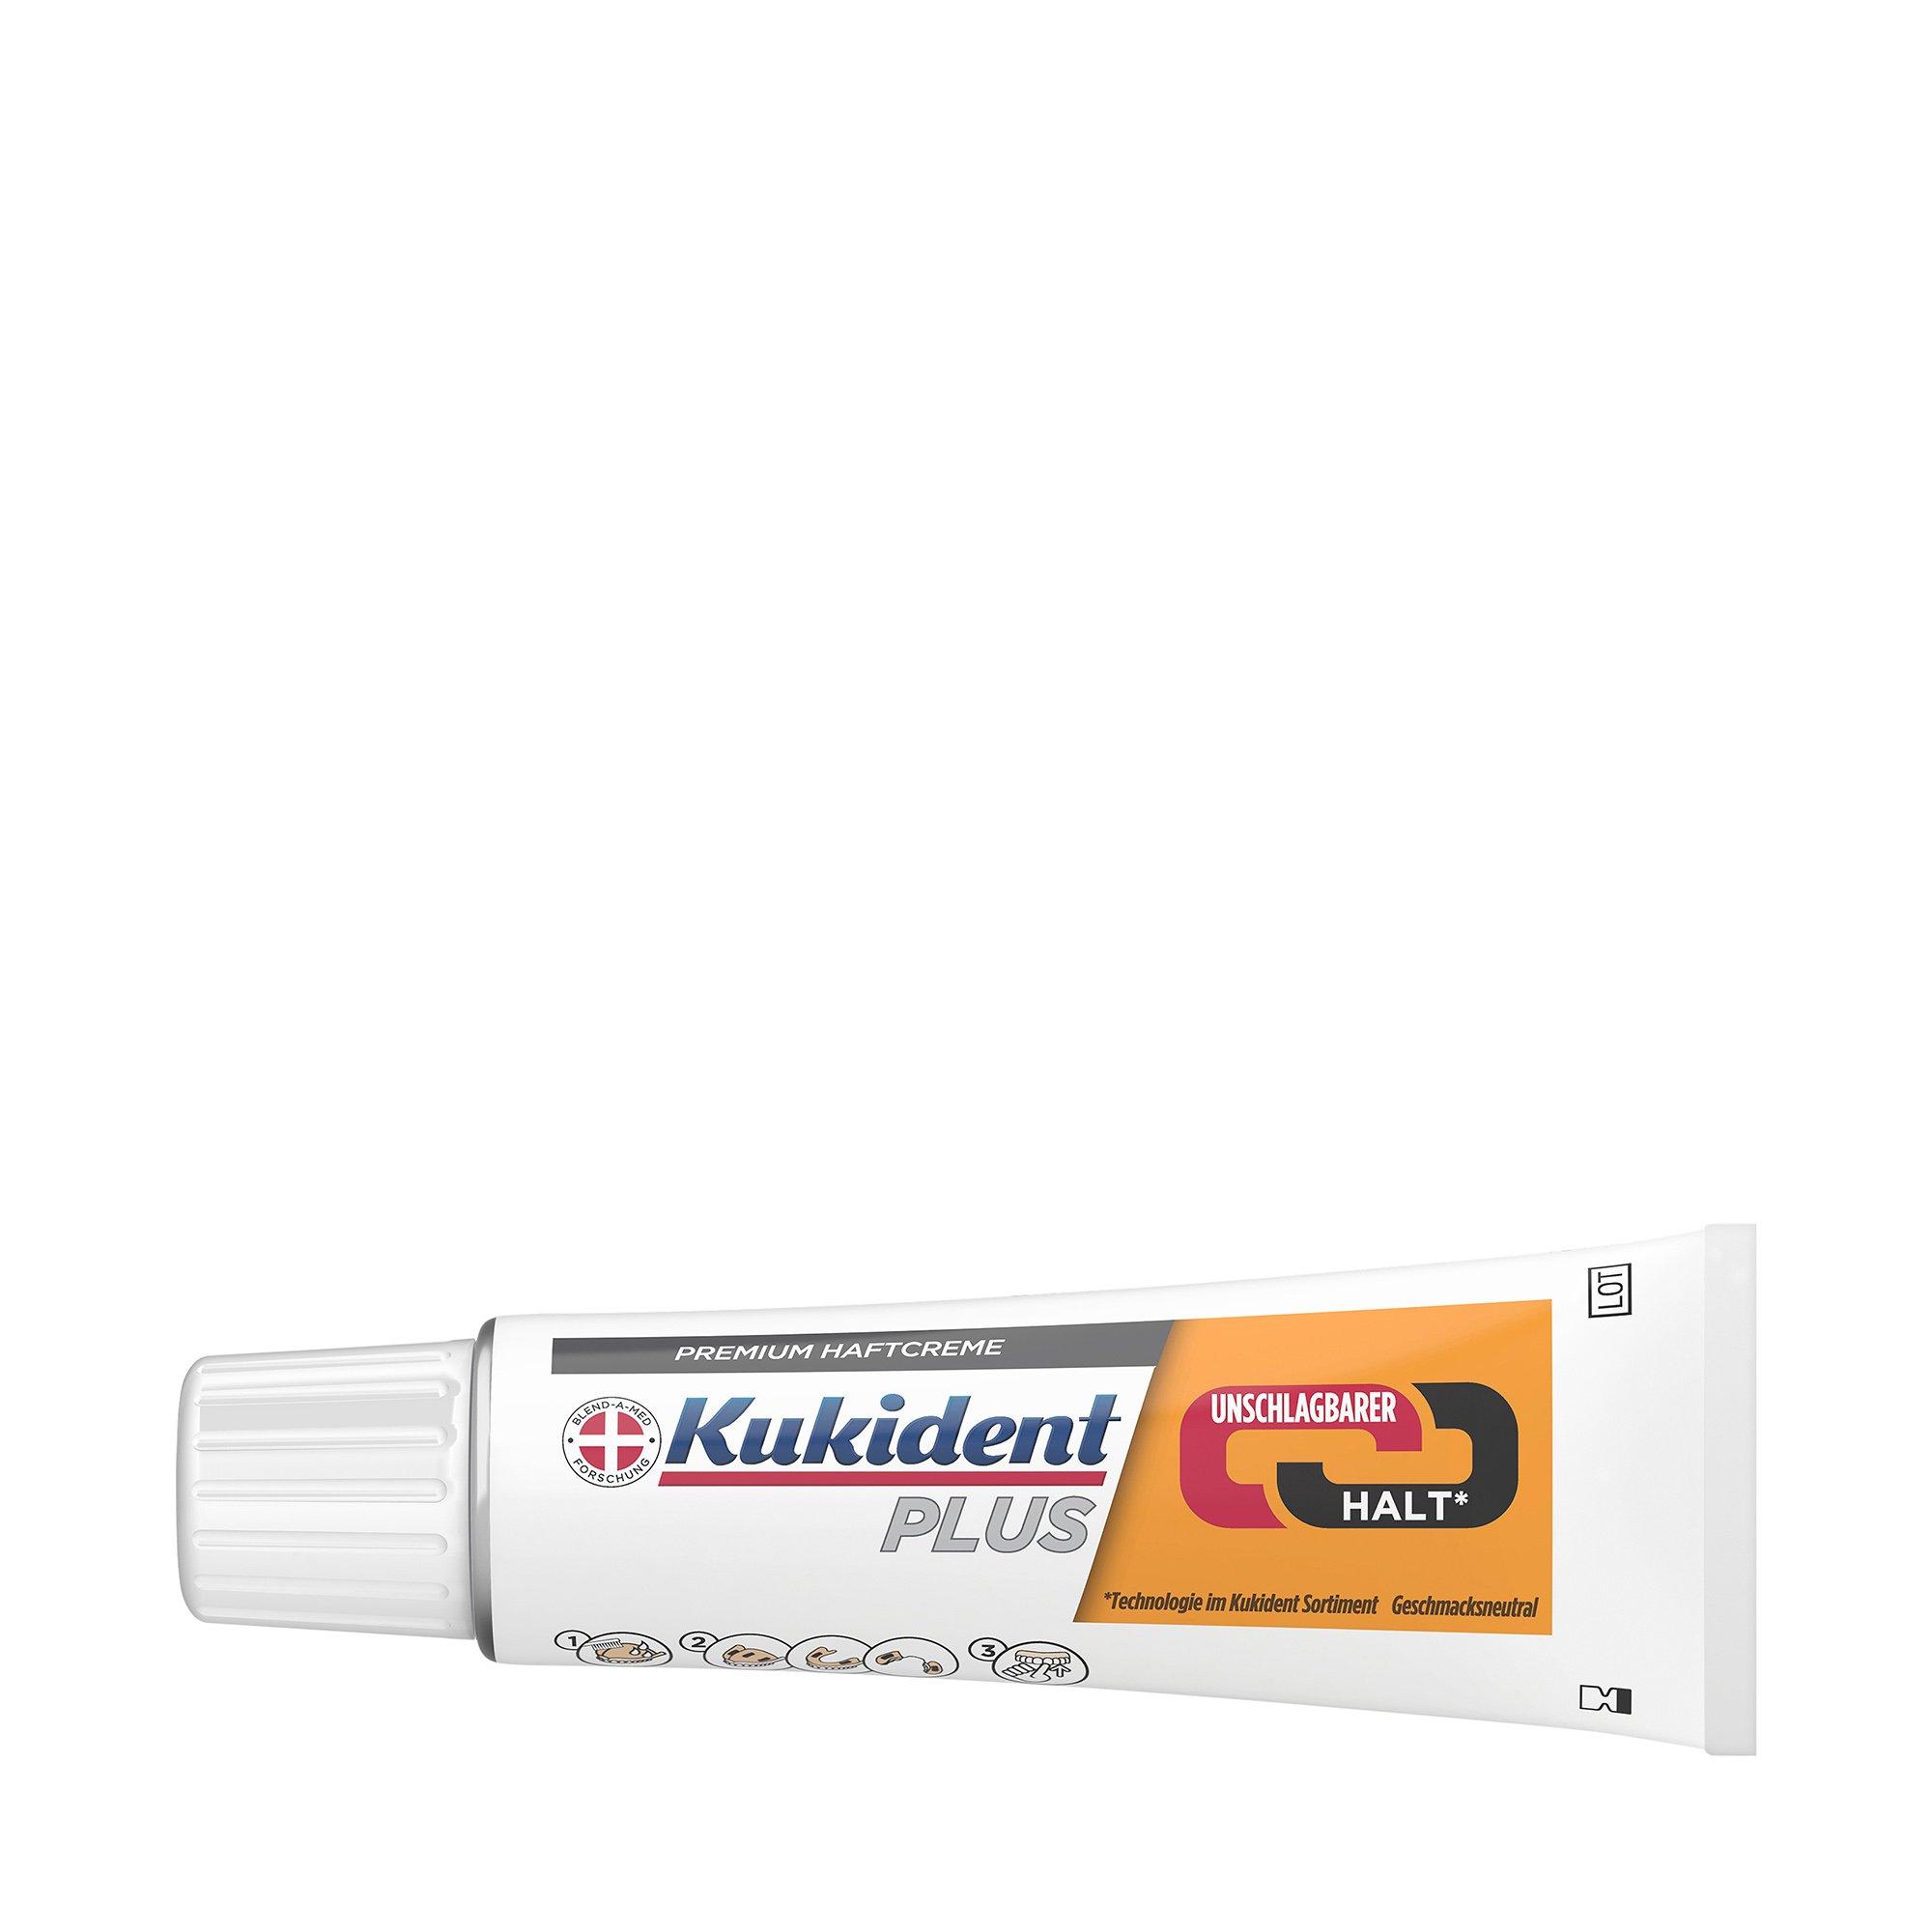 Image of Kukident Plus Premium Haftcreme - 40g